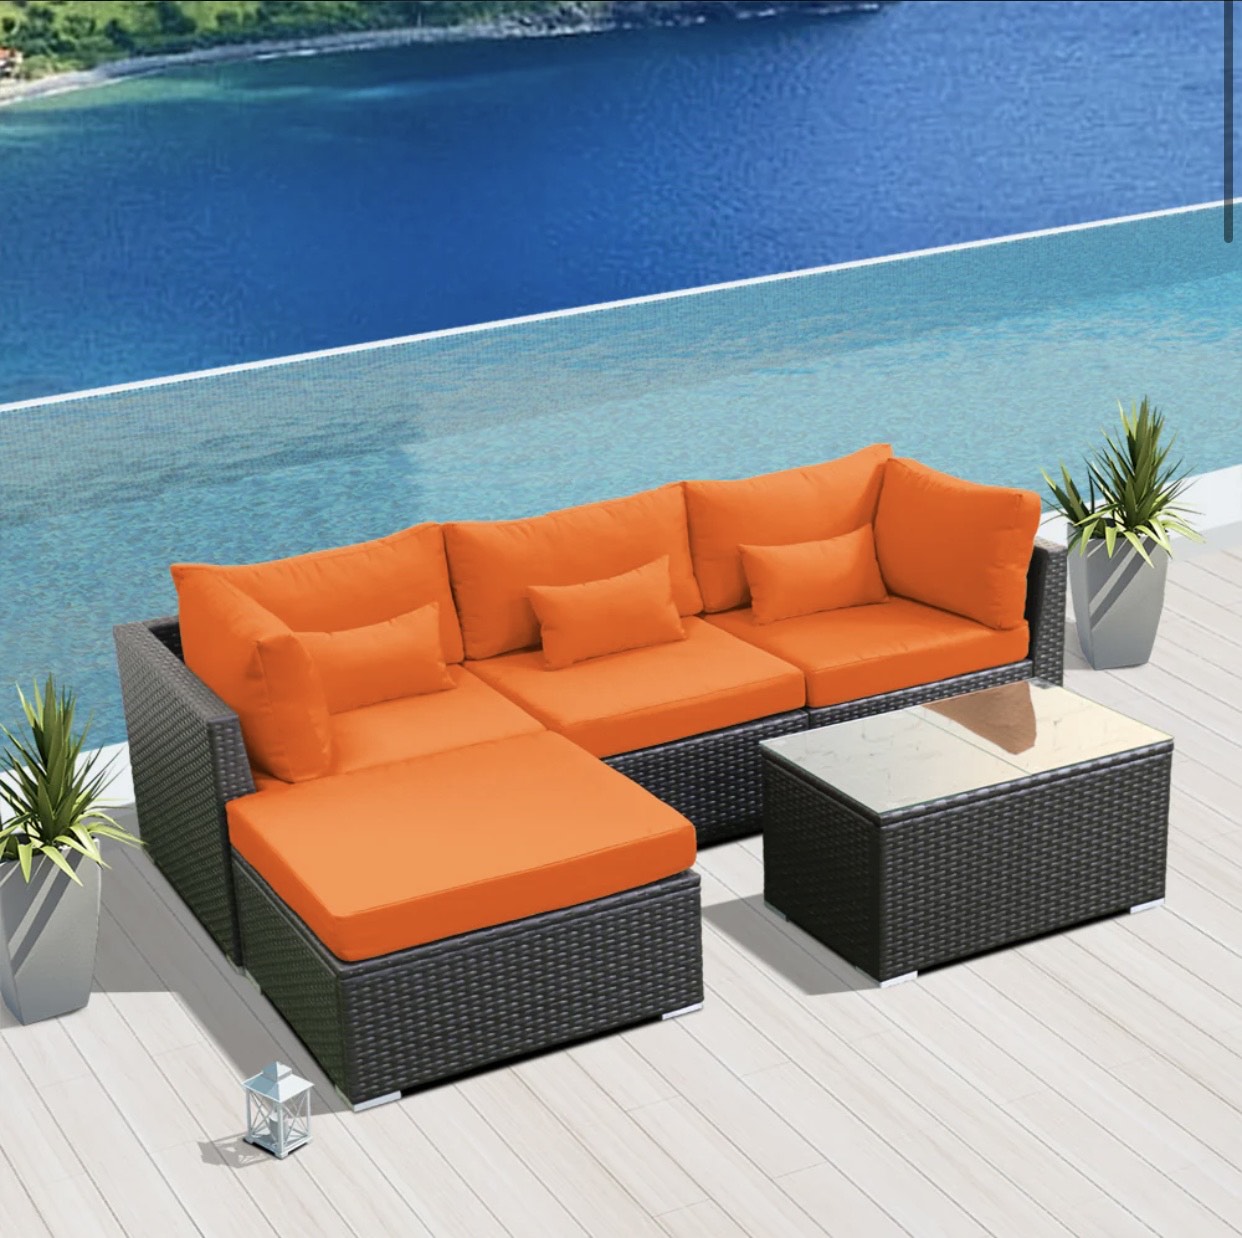 Orange Outdoor Modern Wicker Patio Furniture Sofa Set 5 Five Piece